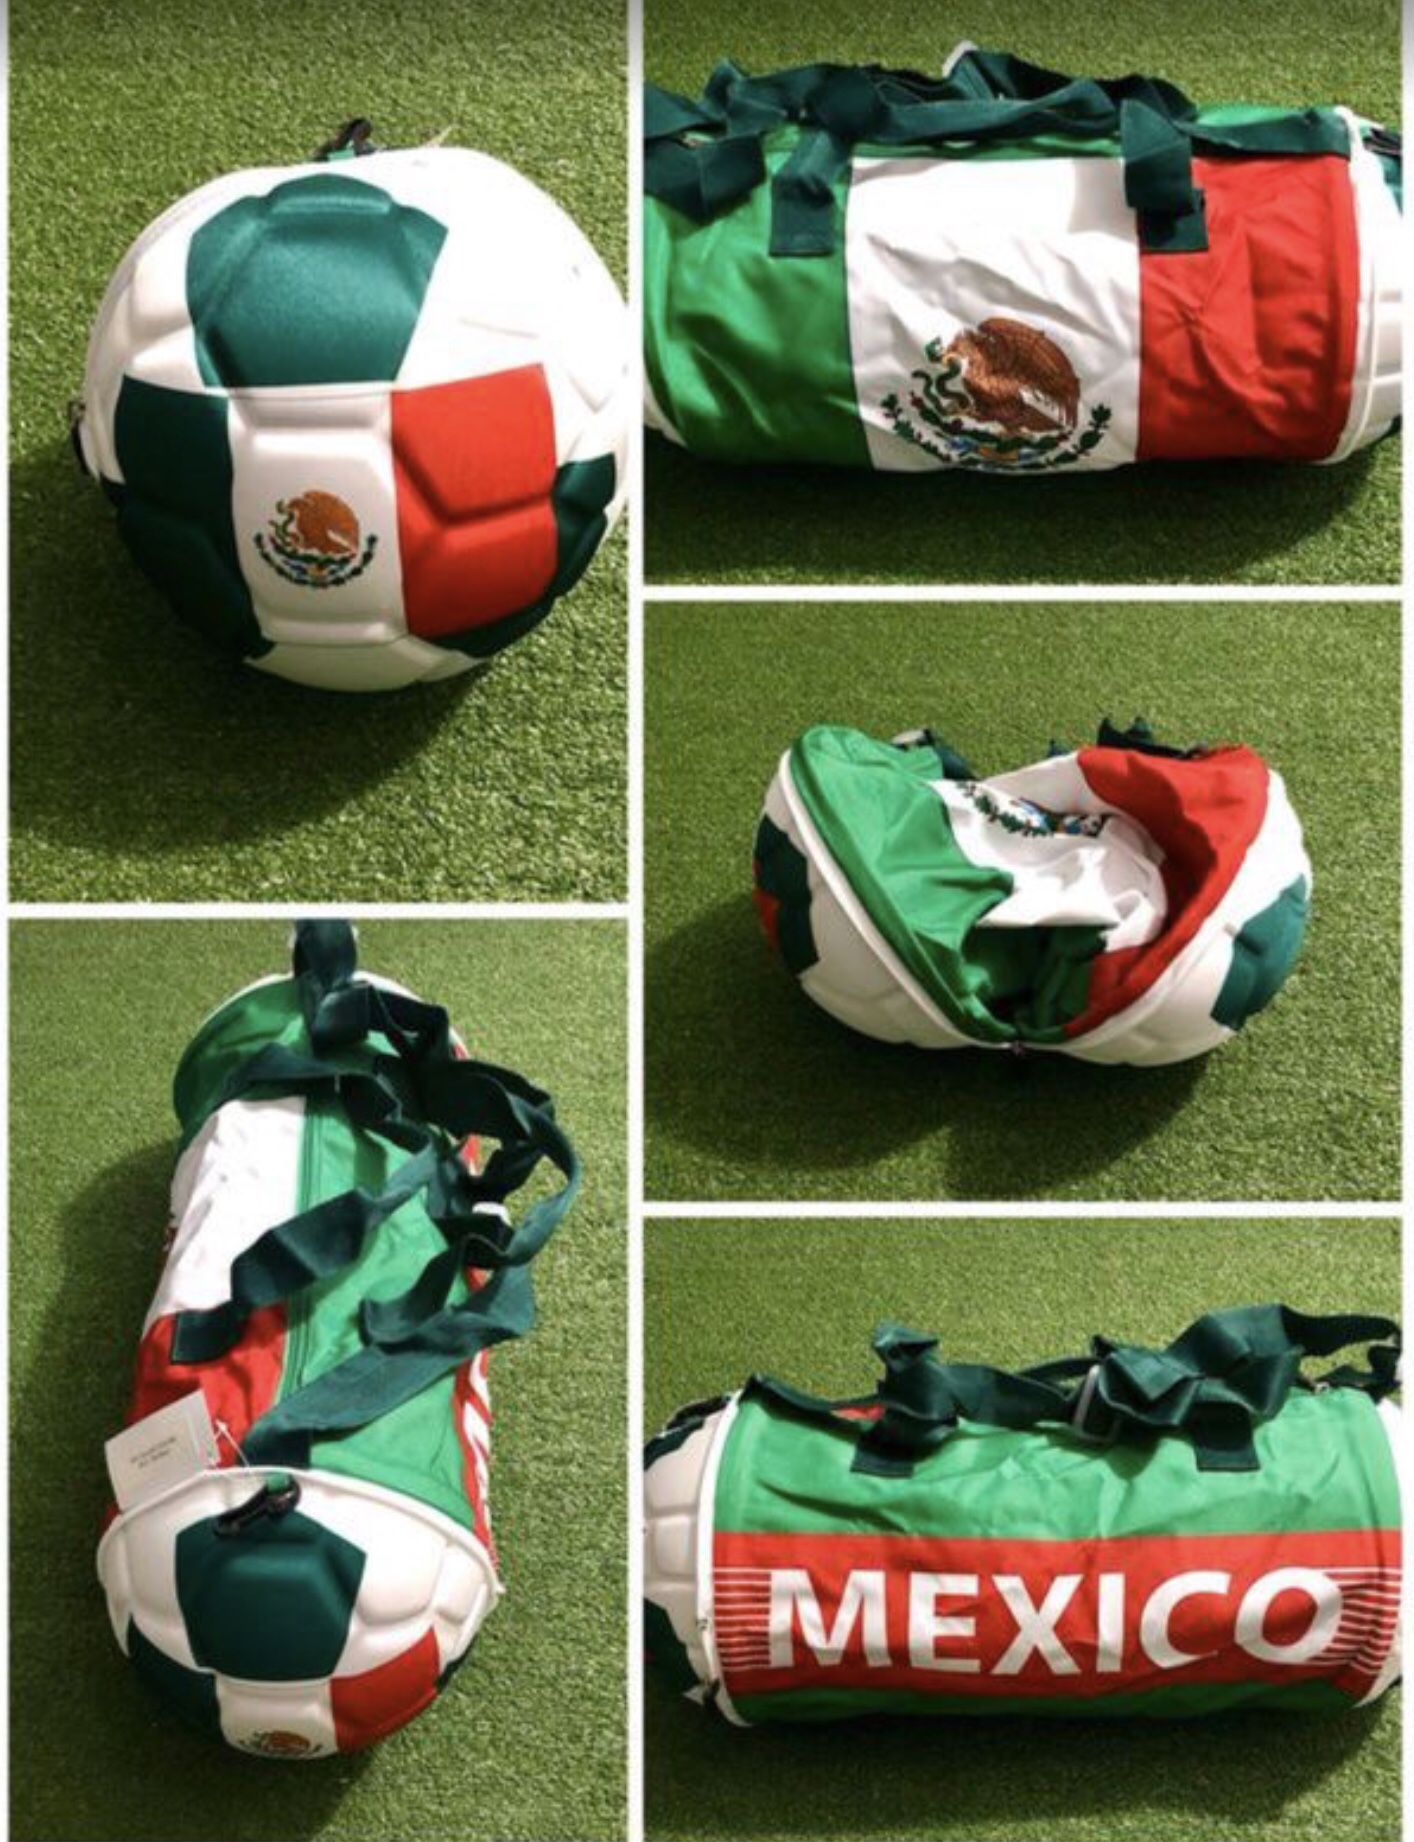 Mexico soccer duffle bag ball.New